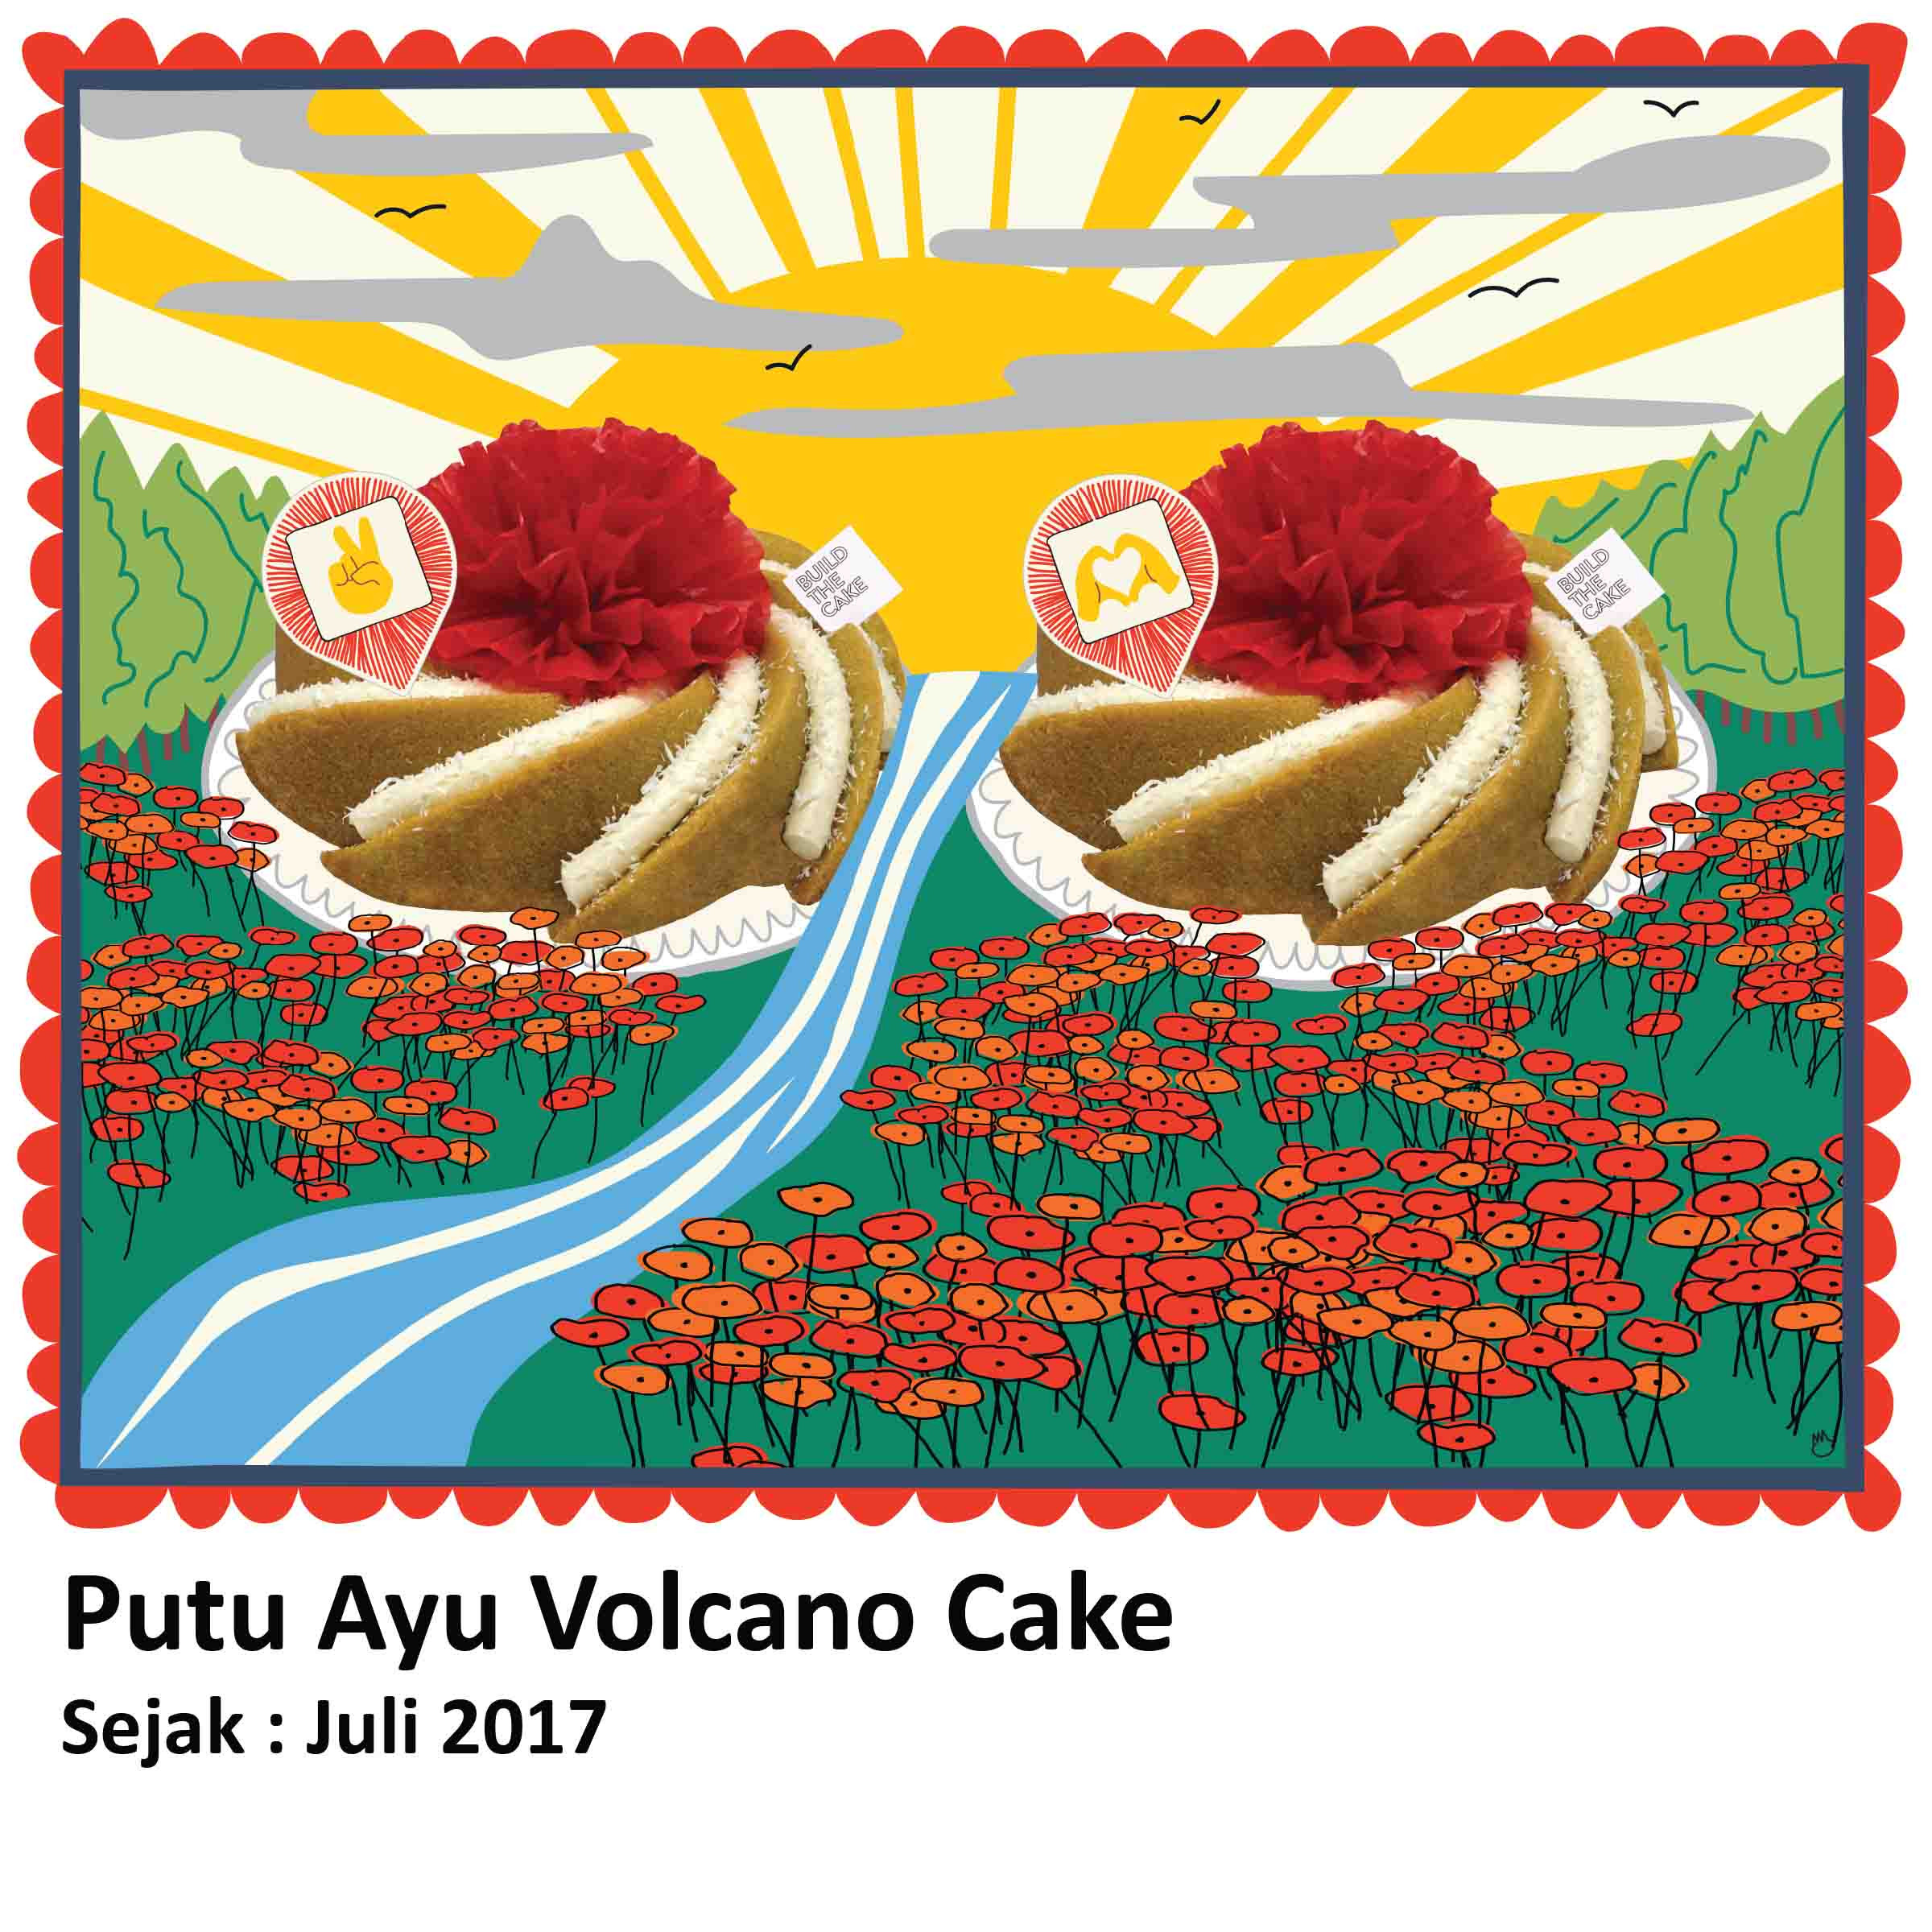 Putu Ayu Volcano Cake